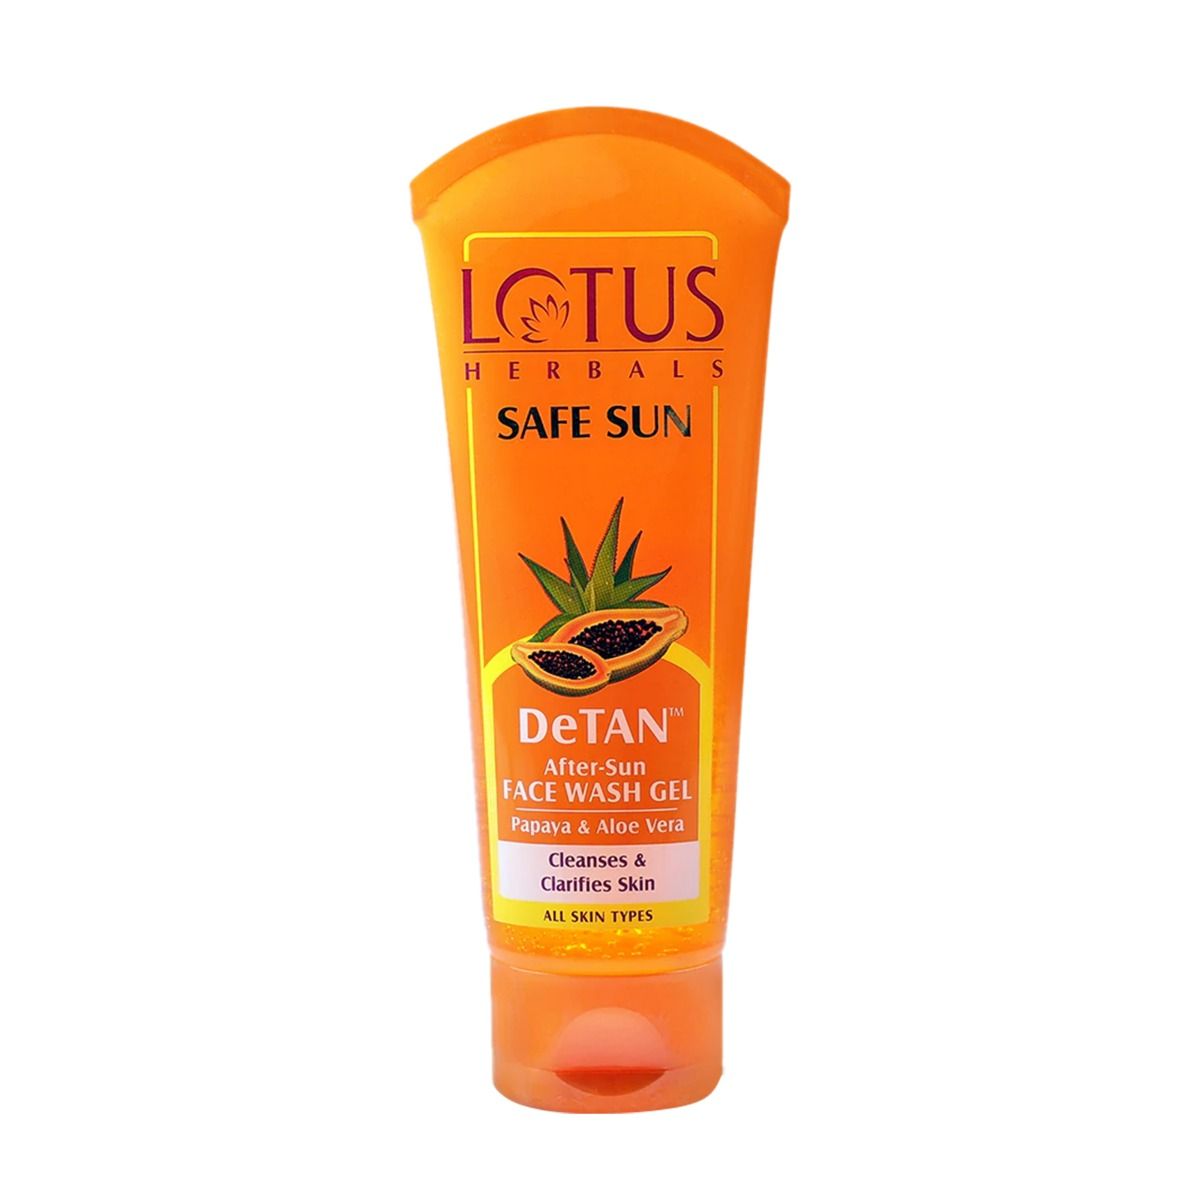 Lotus Herbals Safe Sun DeTan After-Sun Papaya & Aloe Vera Face Wash Gel, 100 gm, Pack of 1 